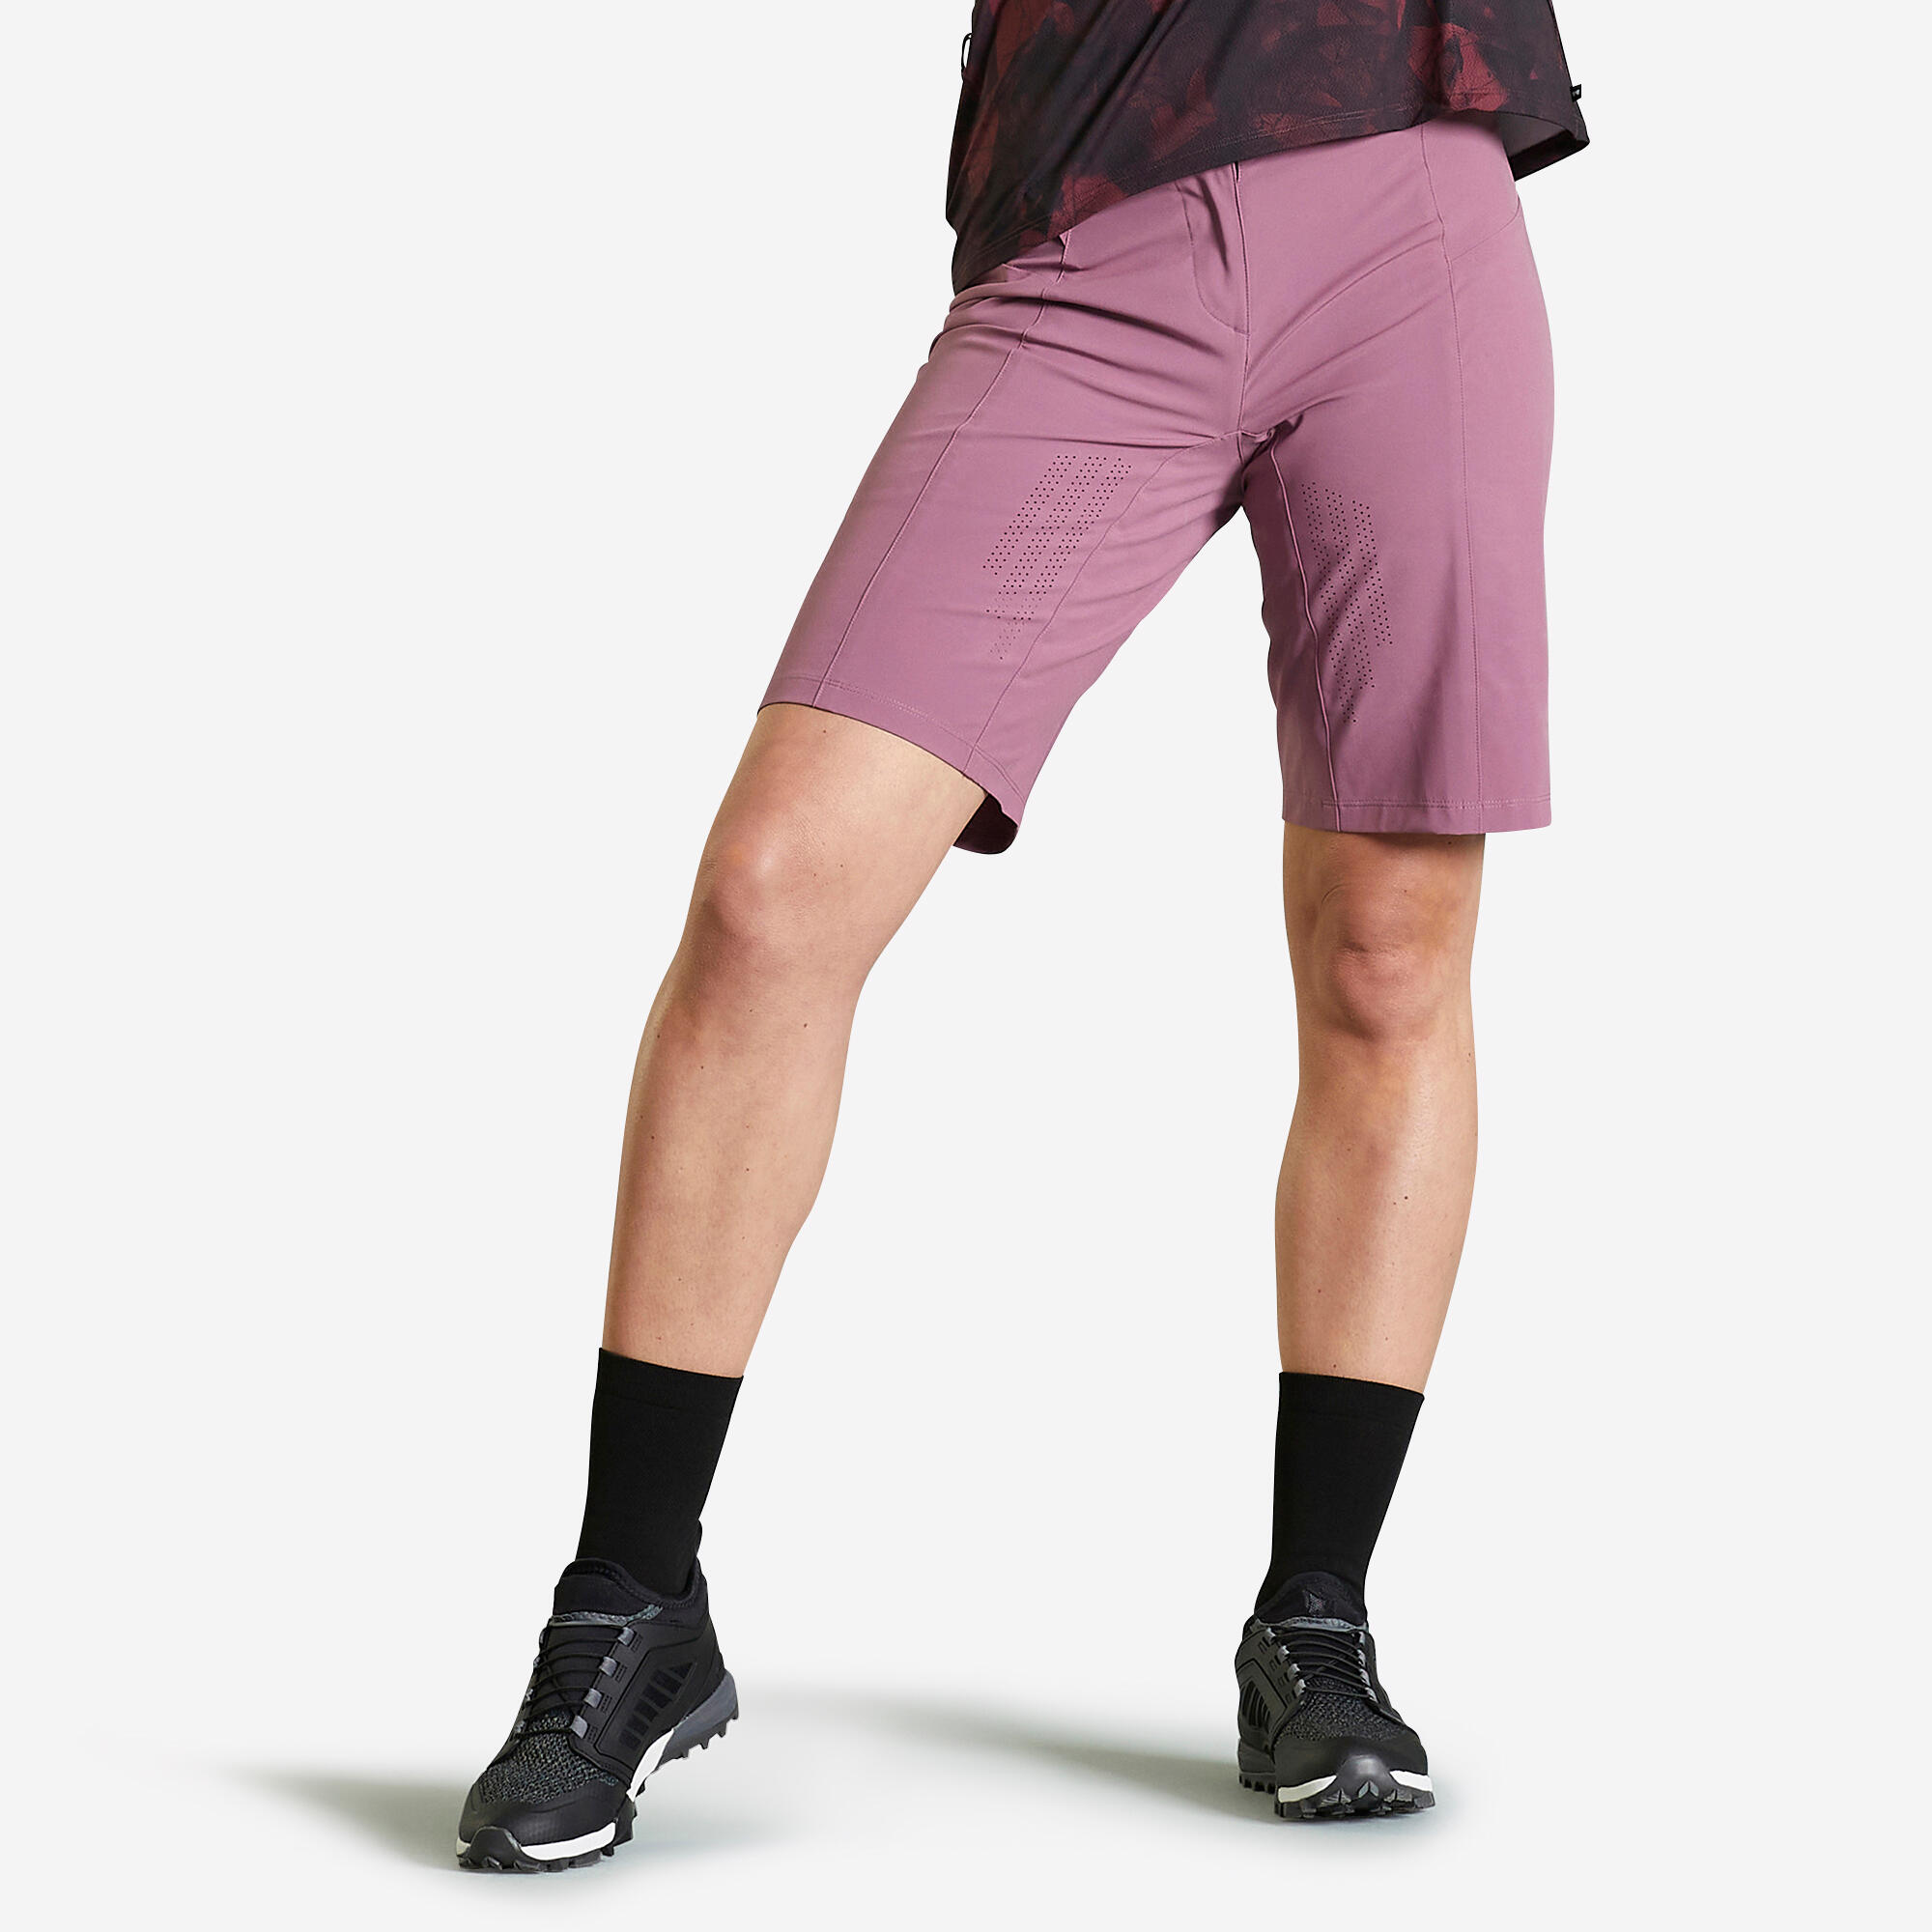 Women's Mountain Biking Shorts EXPL 700 - Pink 1/10